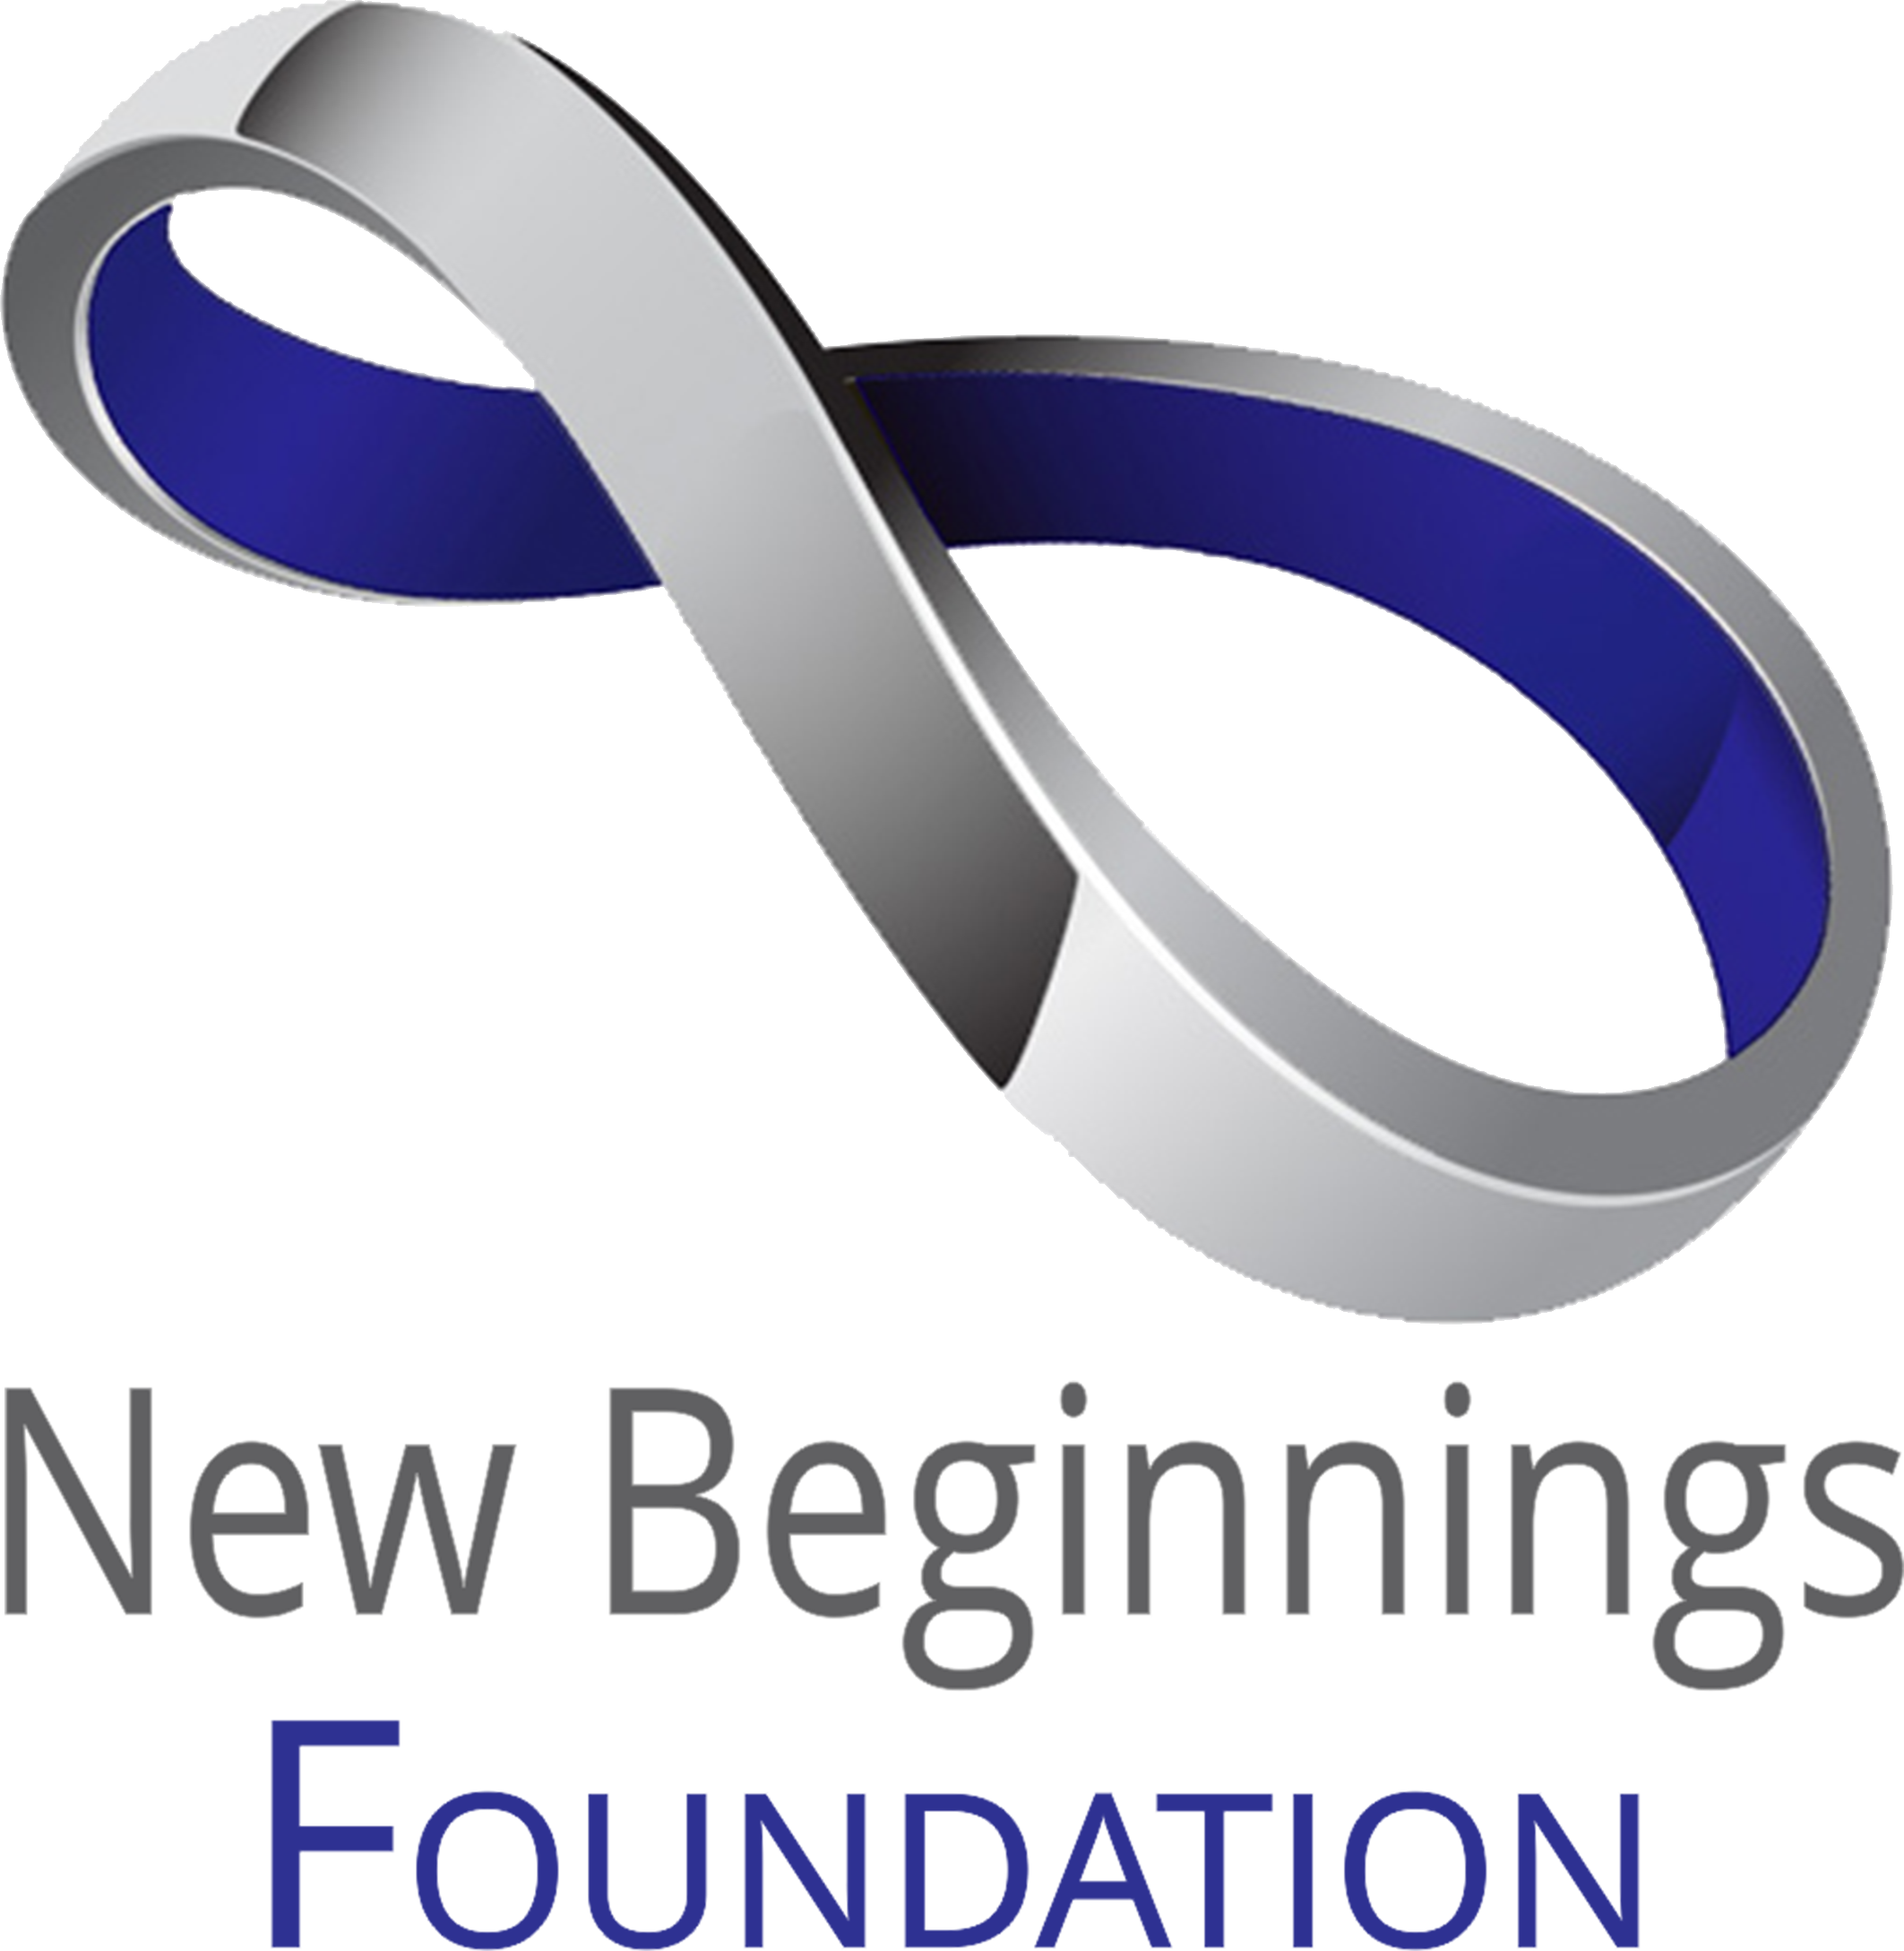 New beginnings logo